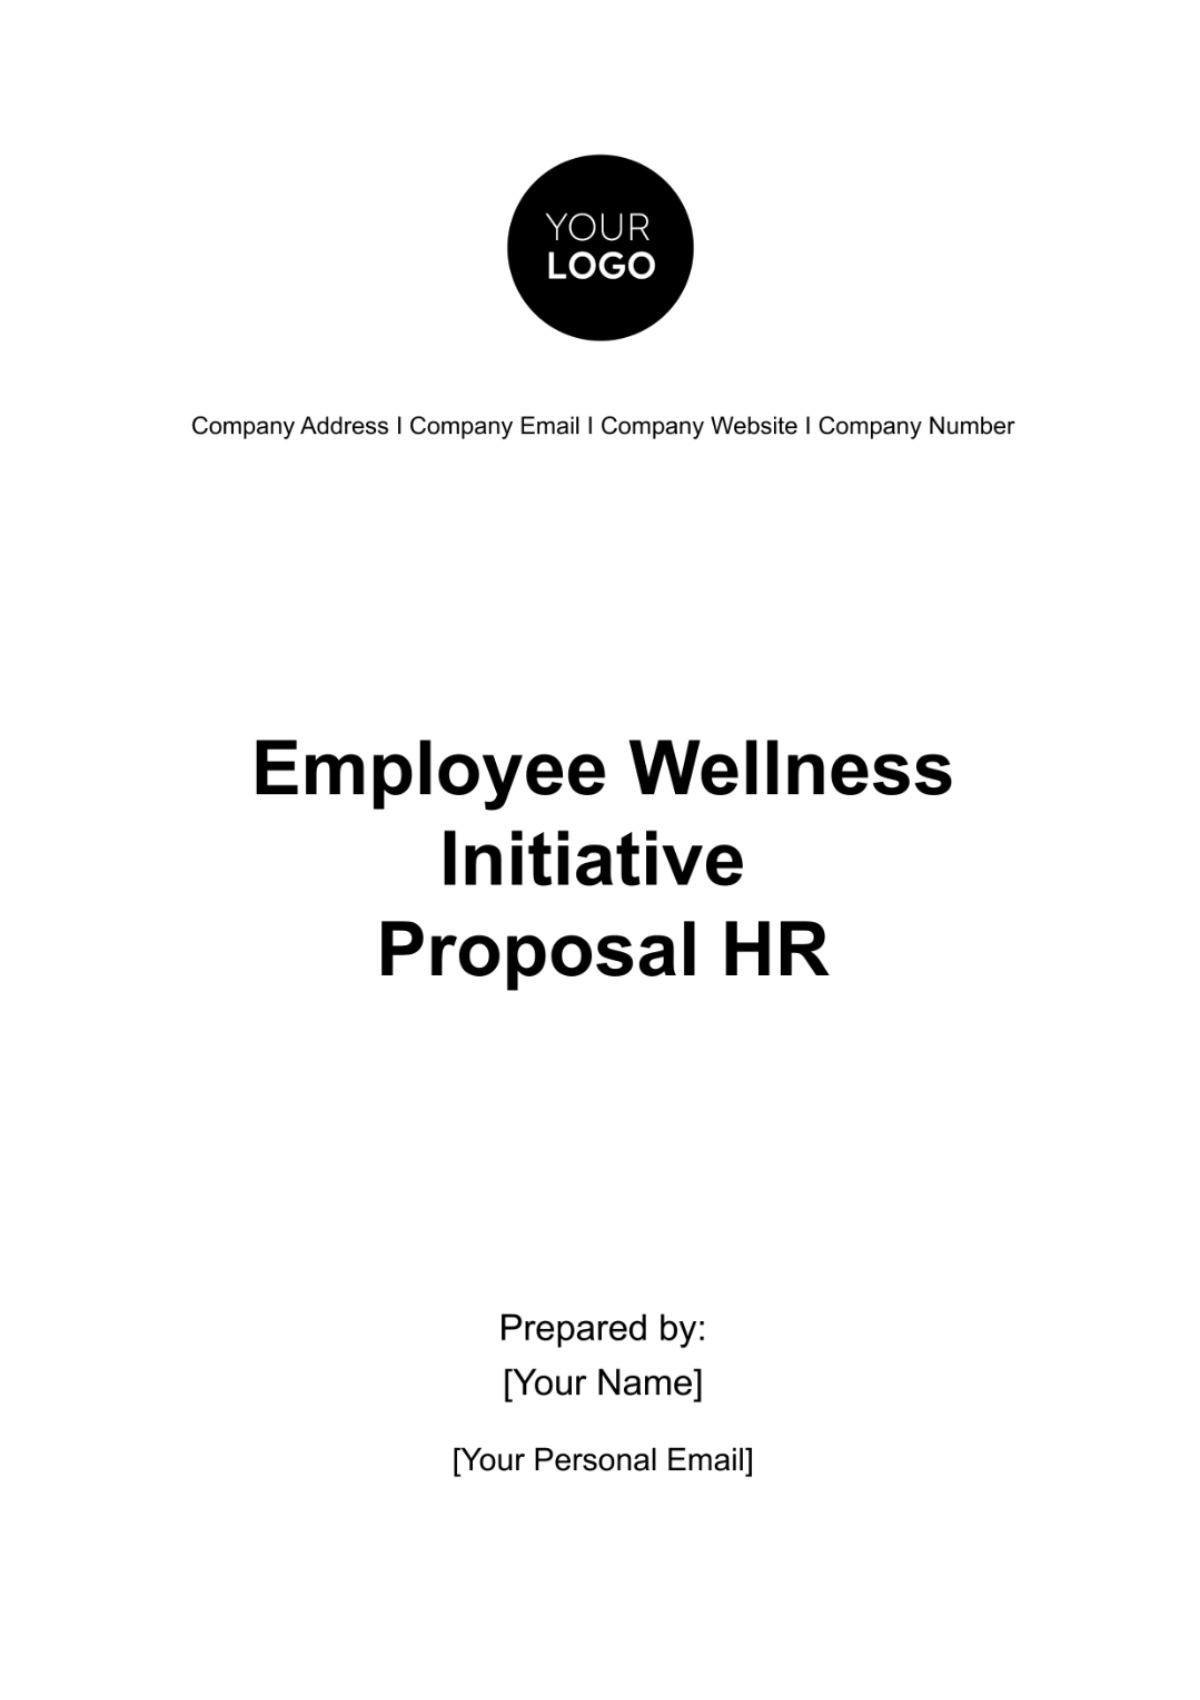 Employee Wellness Initiative Proposal HR Template